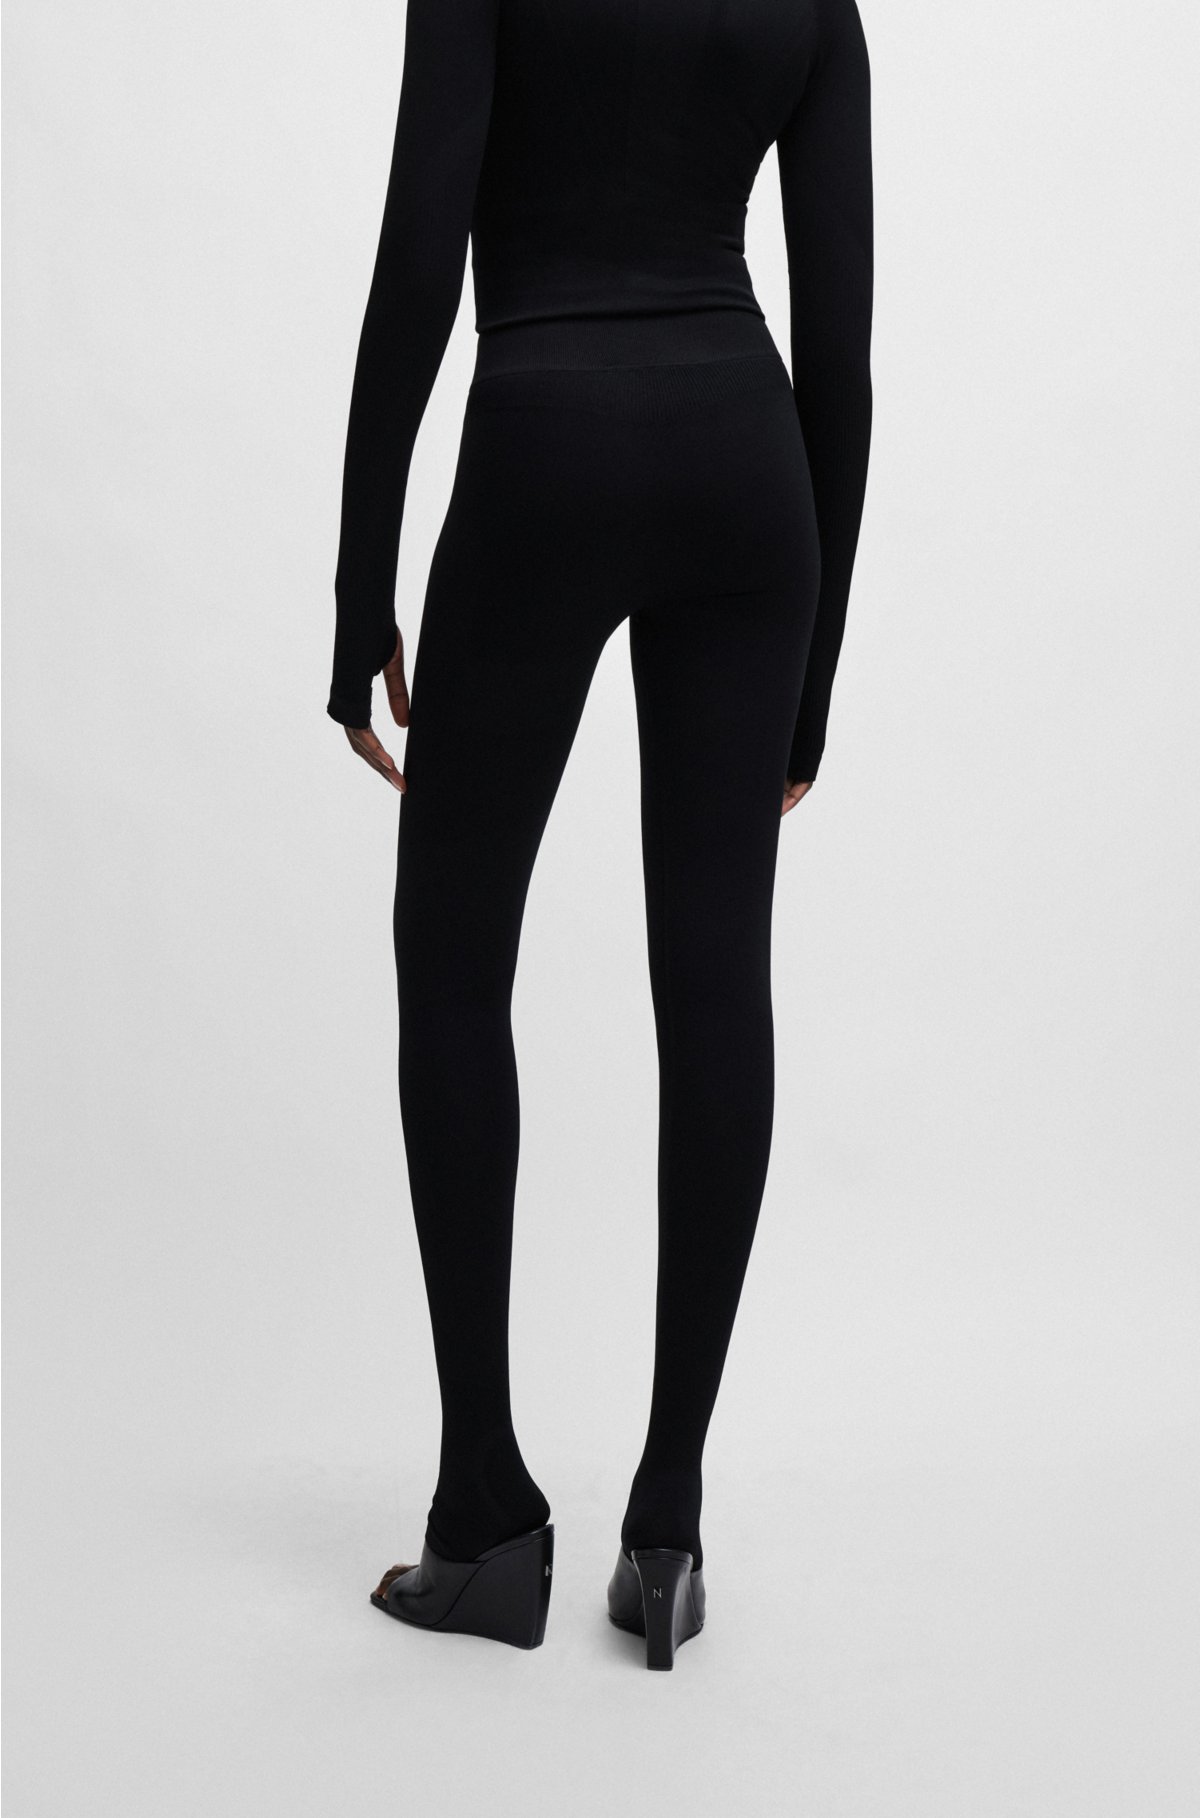 HUGO - Skinny-fit super-stretch leggings with logo details